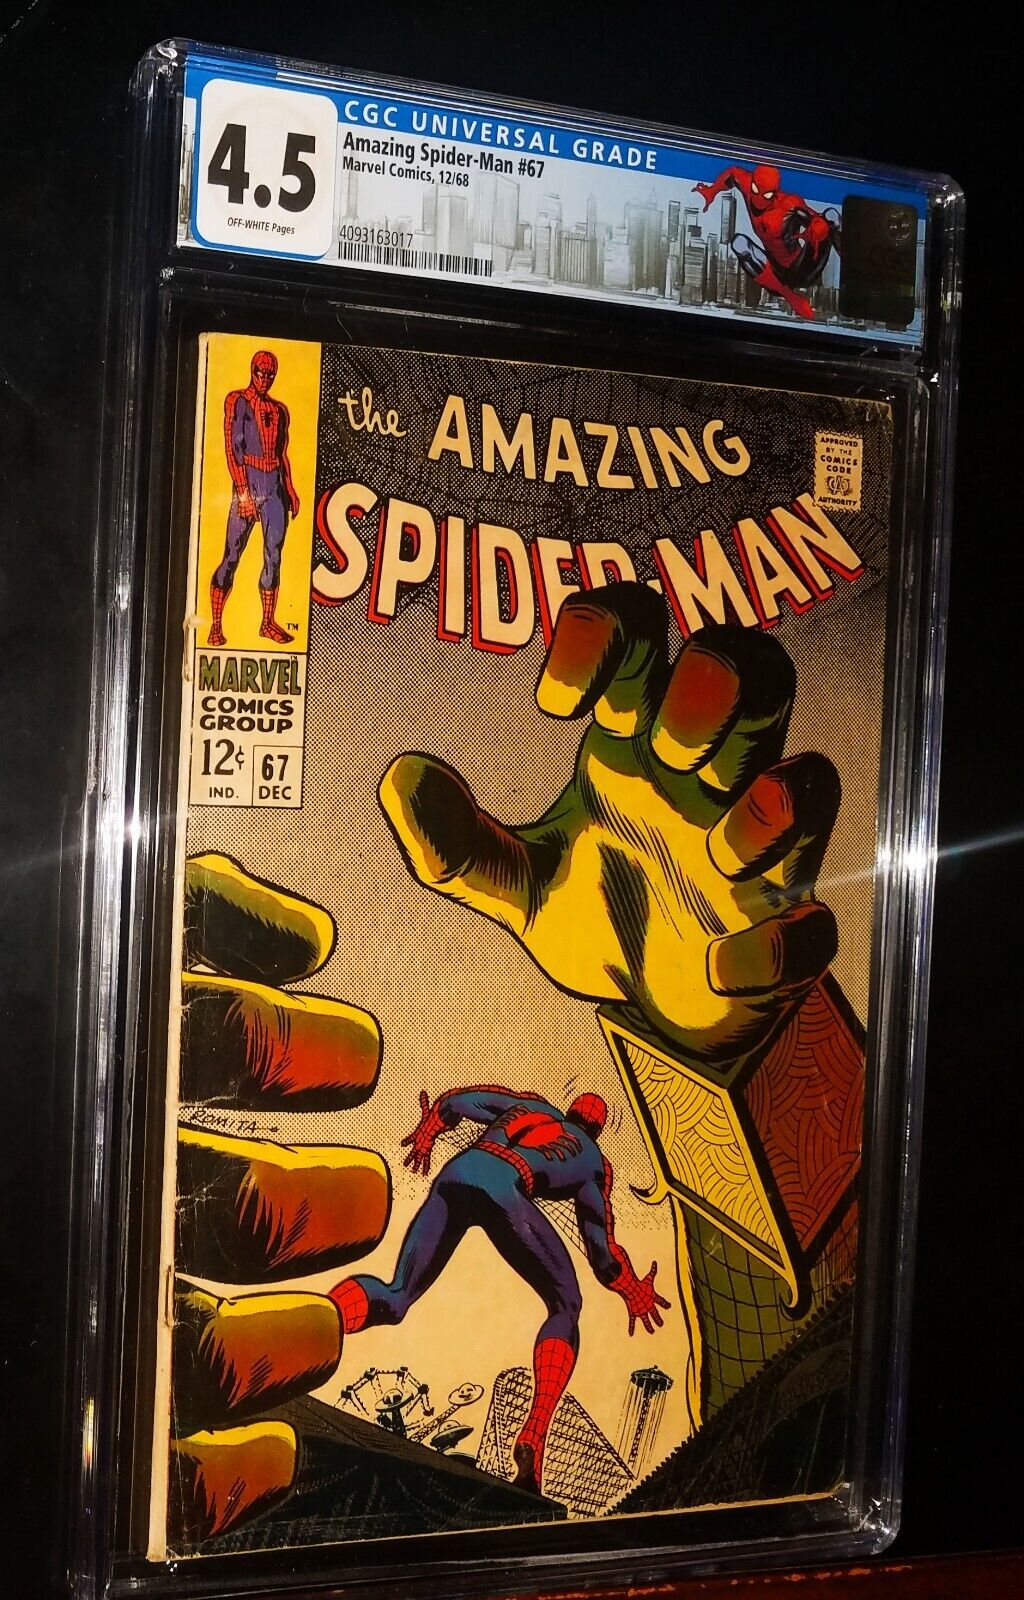 CGC AMAZING SPIDER-MAN #67 1968 Marvel Comics CGC 4.5 VG+ STAN LEE